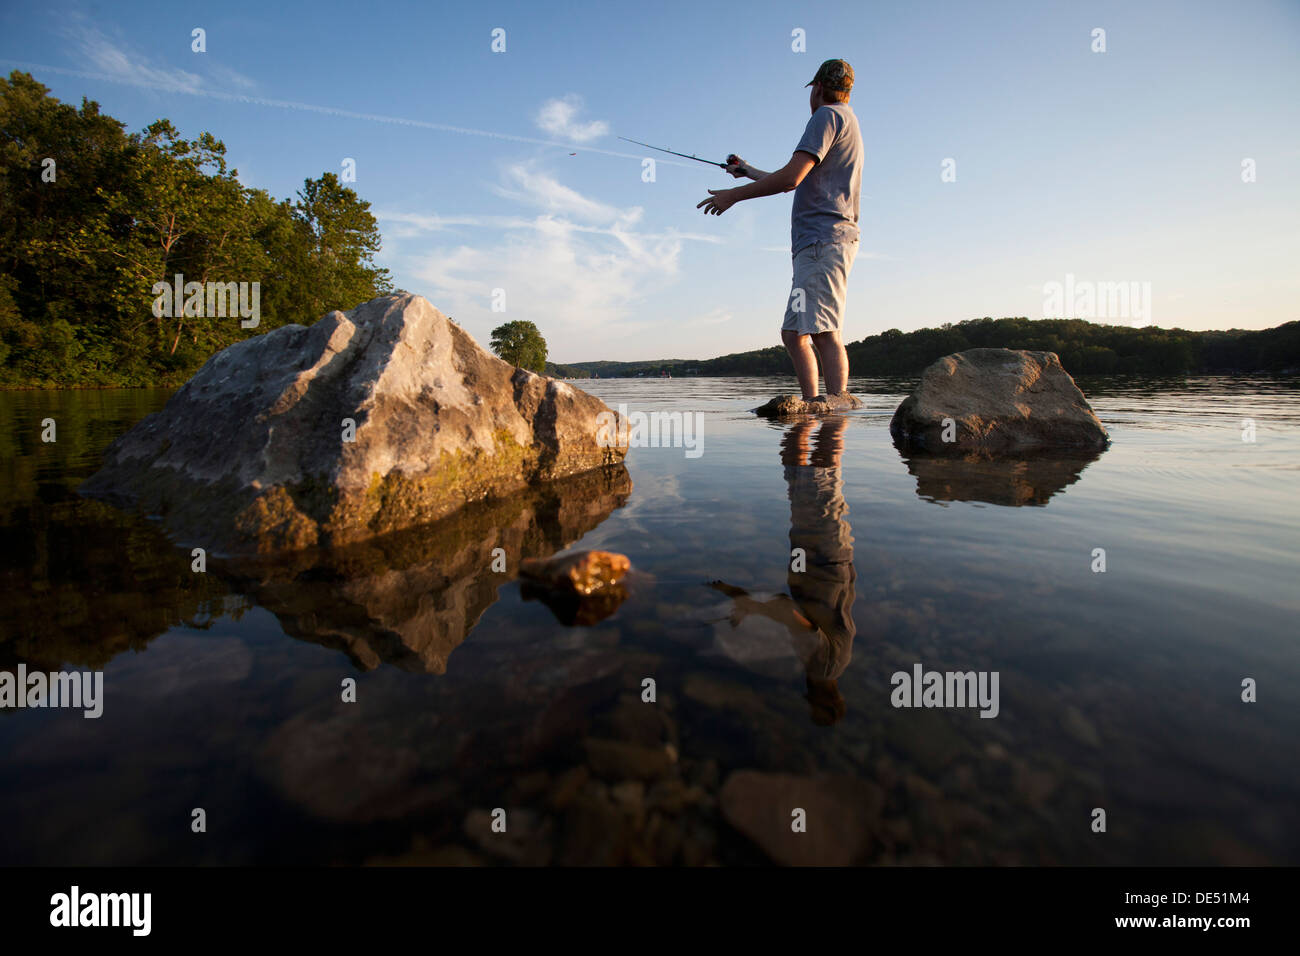 https://c8.alamy.com/comp/DE51M4/a-man-casts-his-line-while-fishing-on-lake-windsor-in-bella-vista-DE51M4.jpg